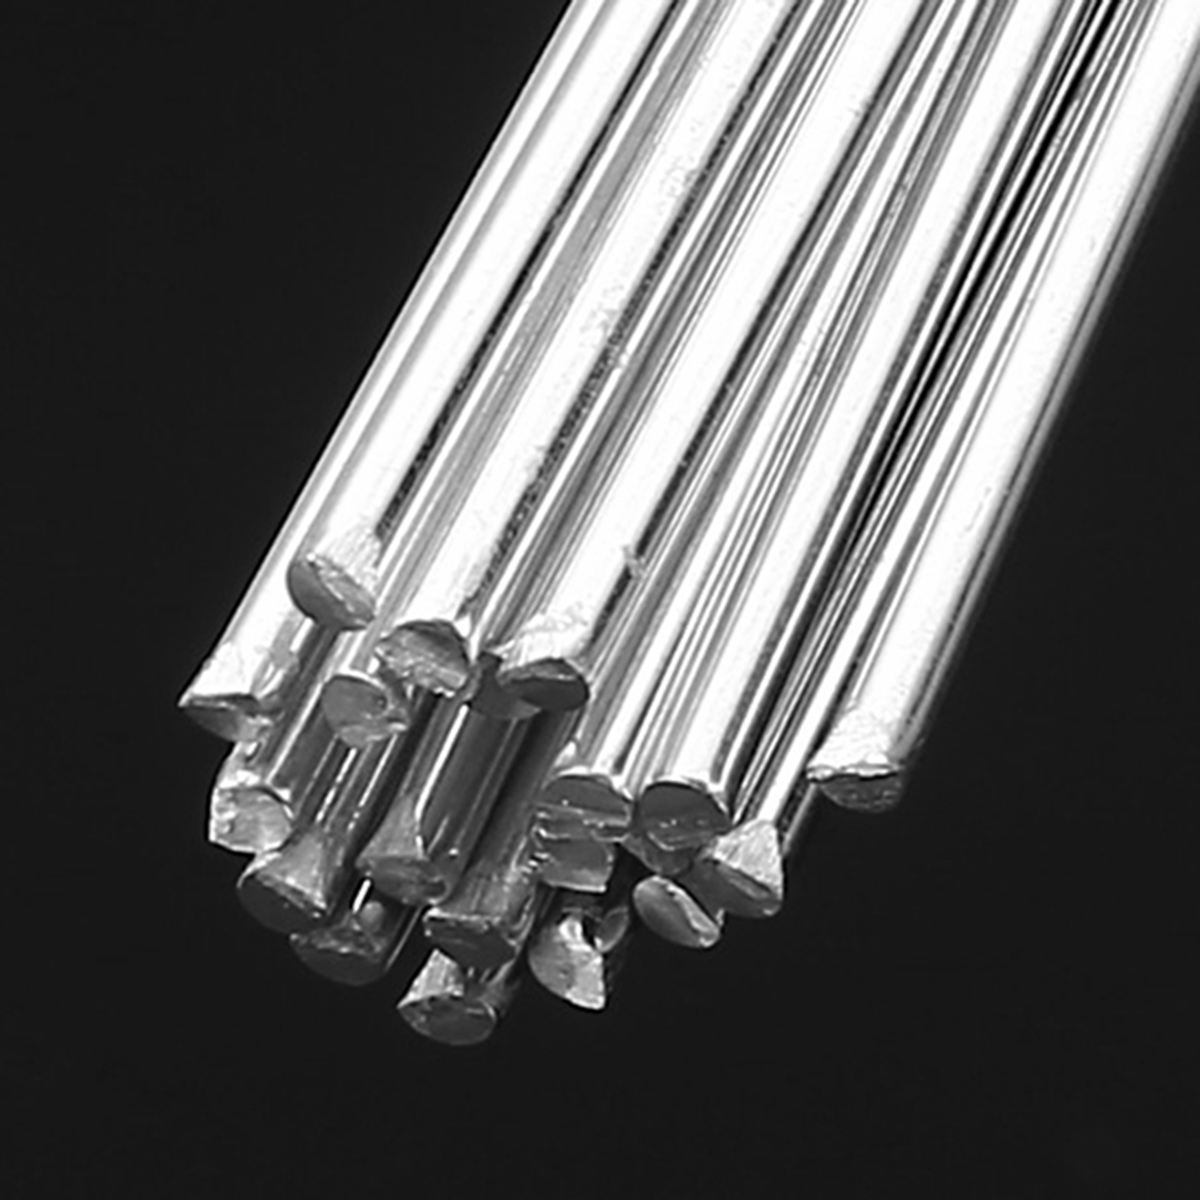 20pcs 2mm Diam Aluminum Welding Rods Low Temperature Wire Soldering Rod Set for Argon Arc Welding and Filling Material